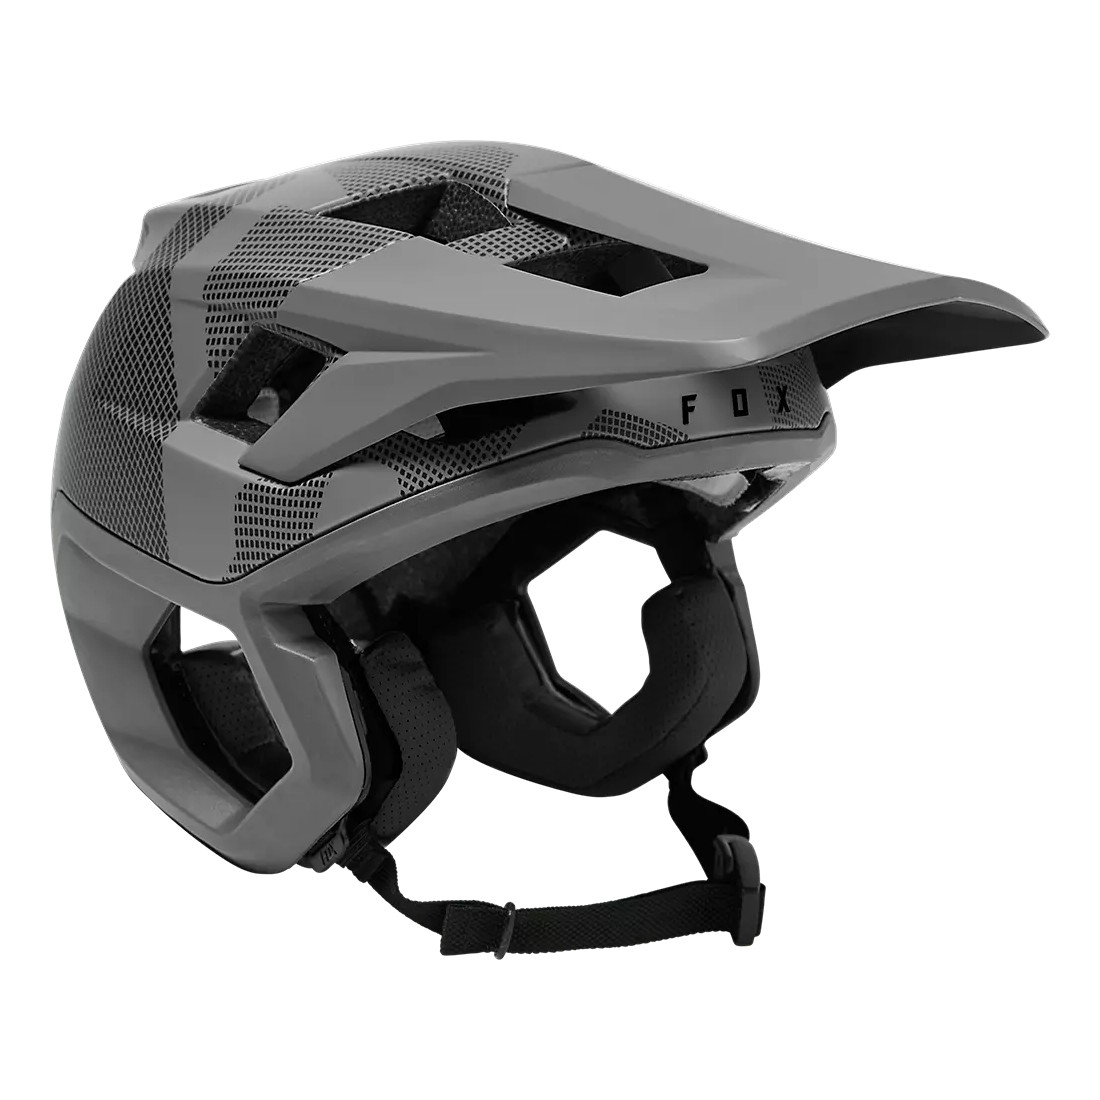 Dropframe Pro Camo Enduro Helmet Gray Camouflage Size M (54-56cm)